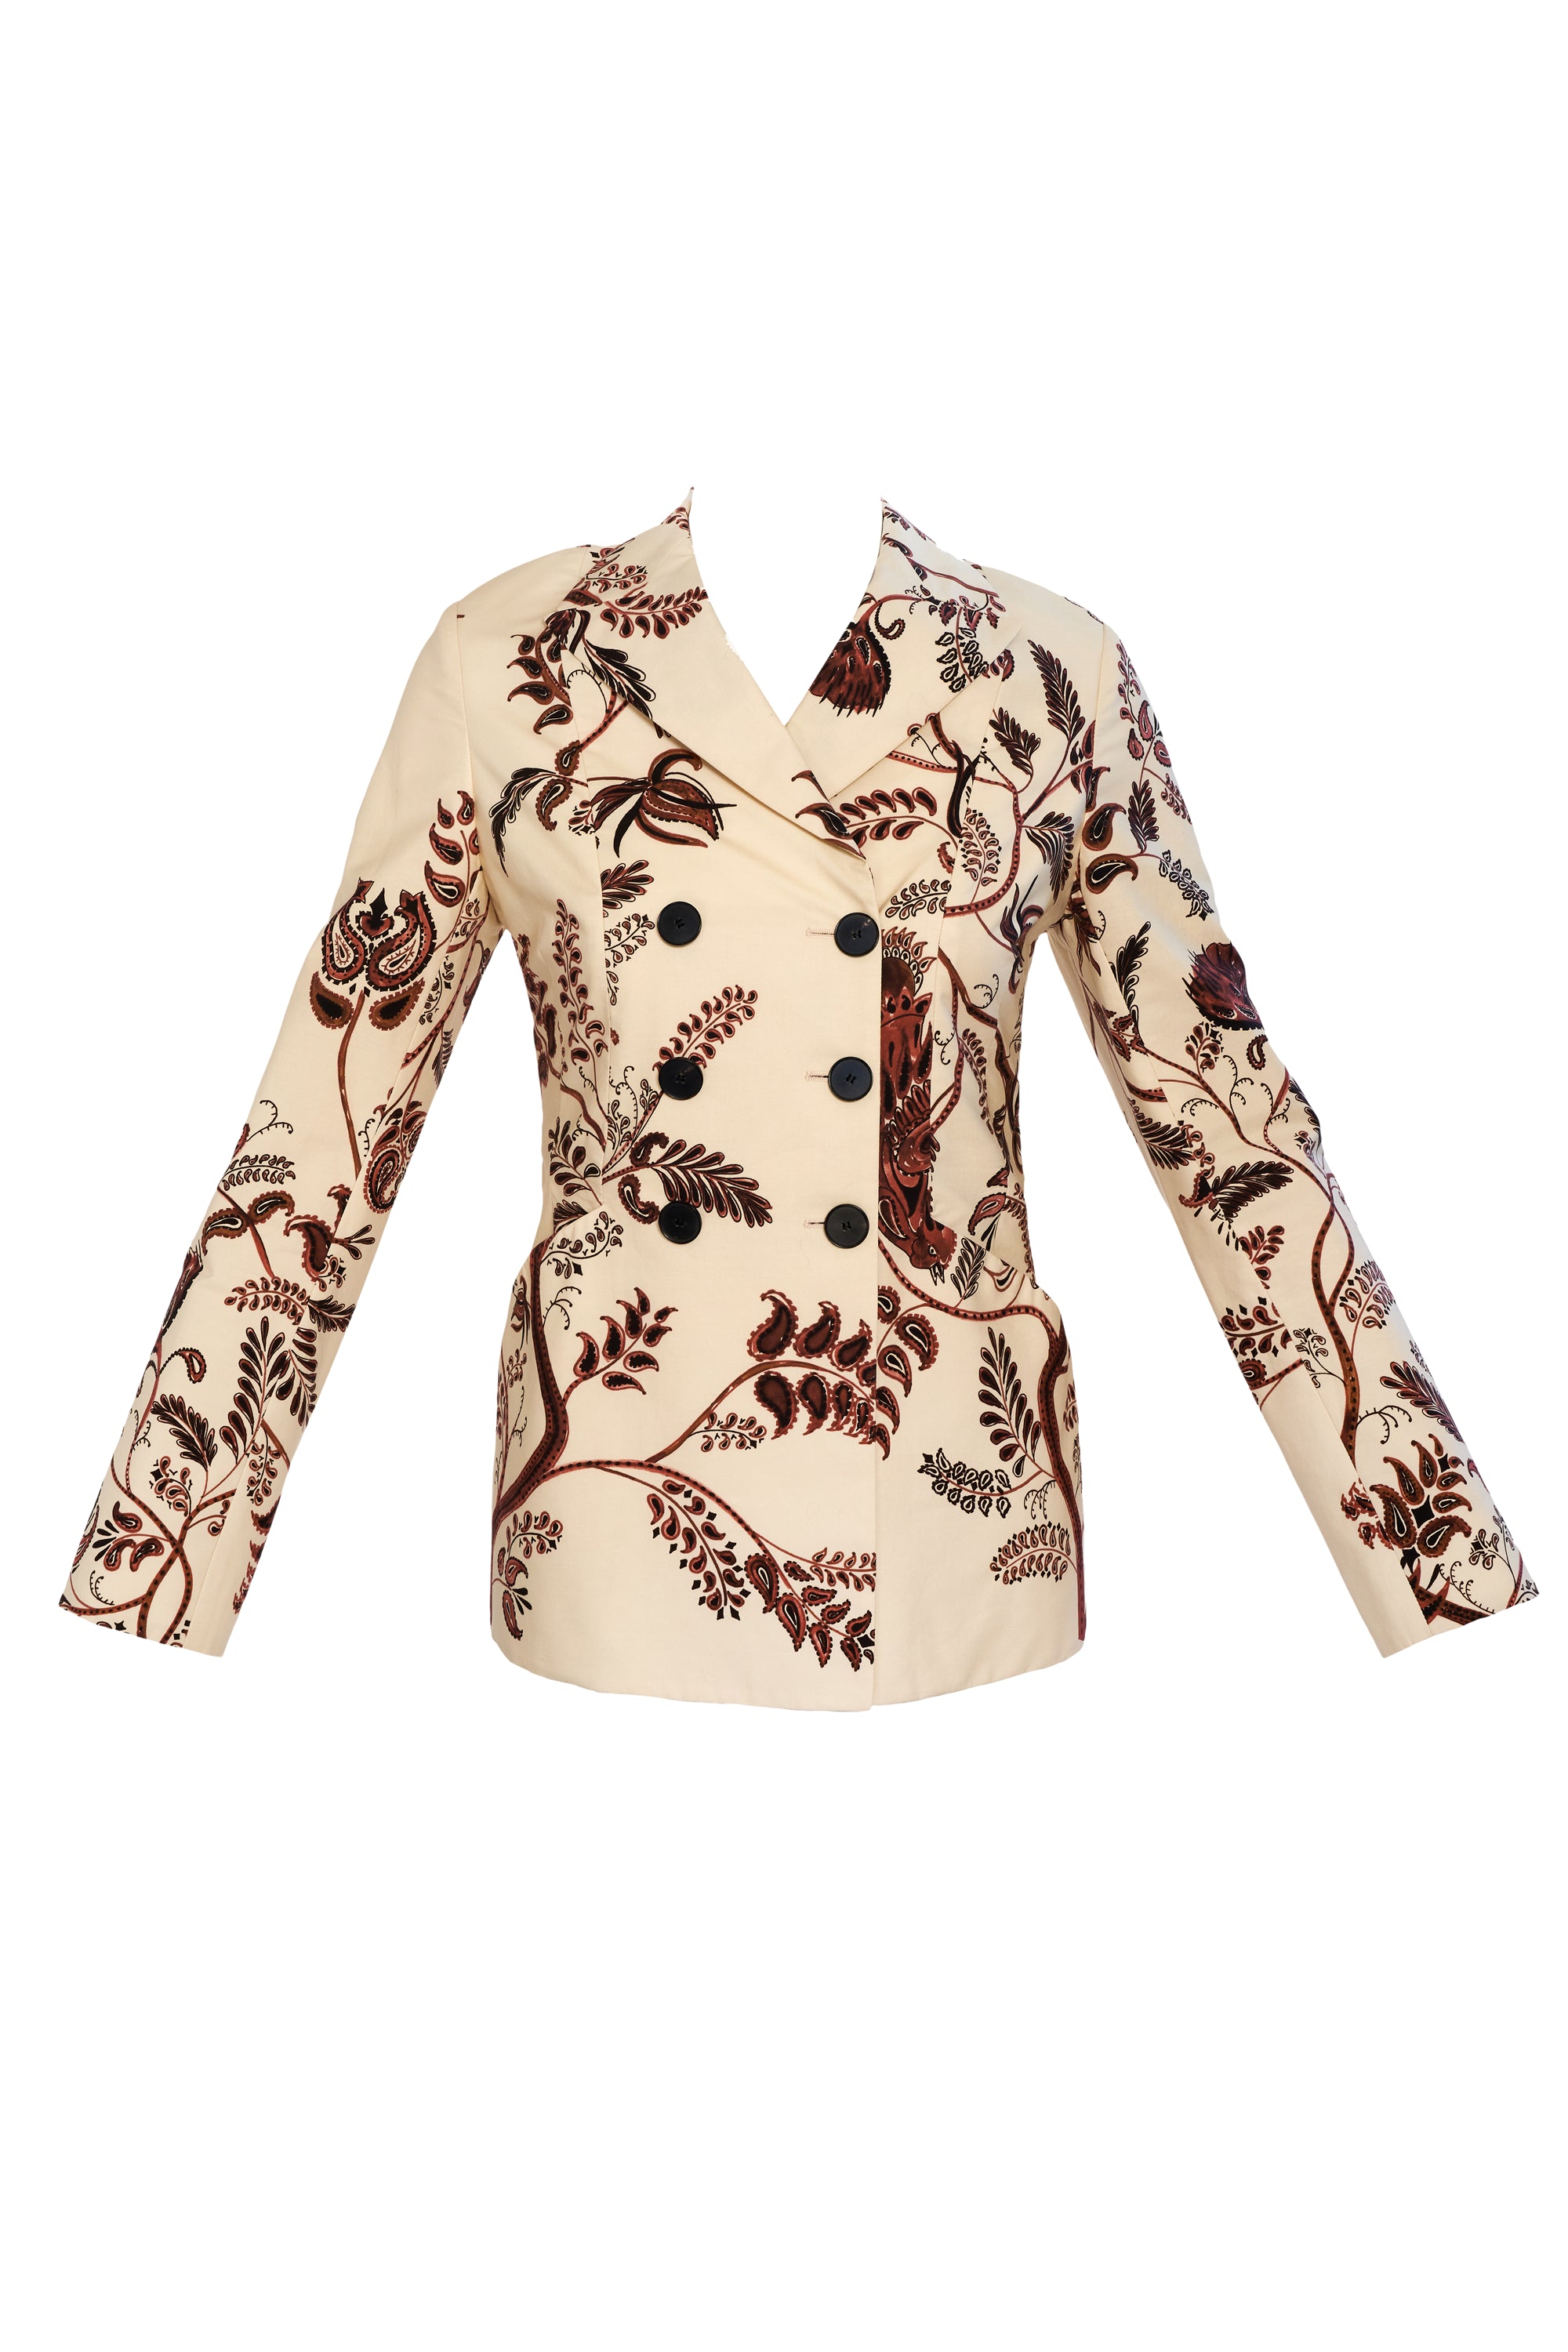 Christian Dior Beige Cotton Pattern Jacket Size 6